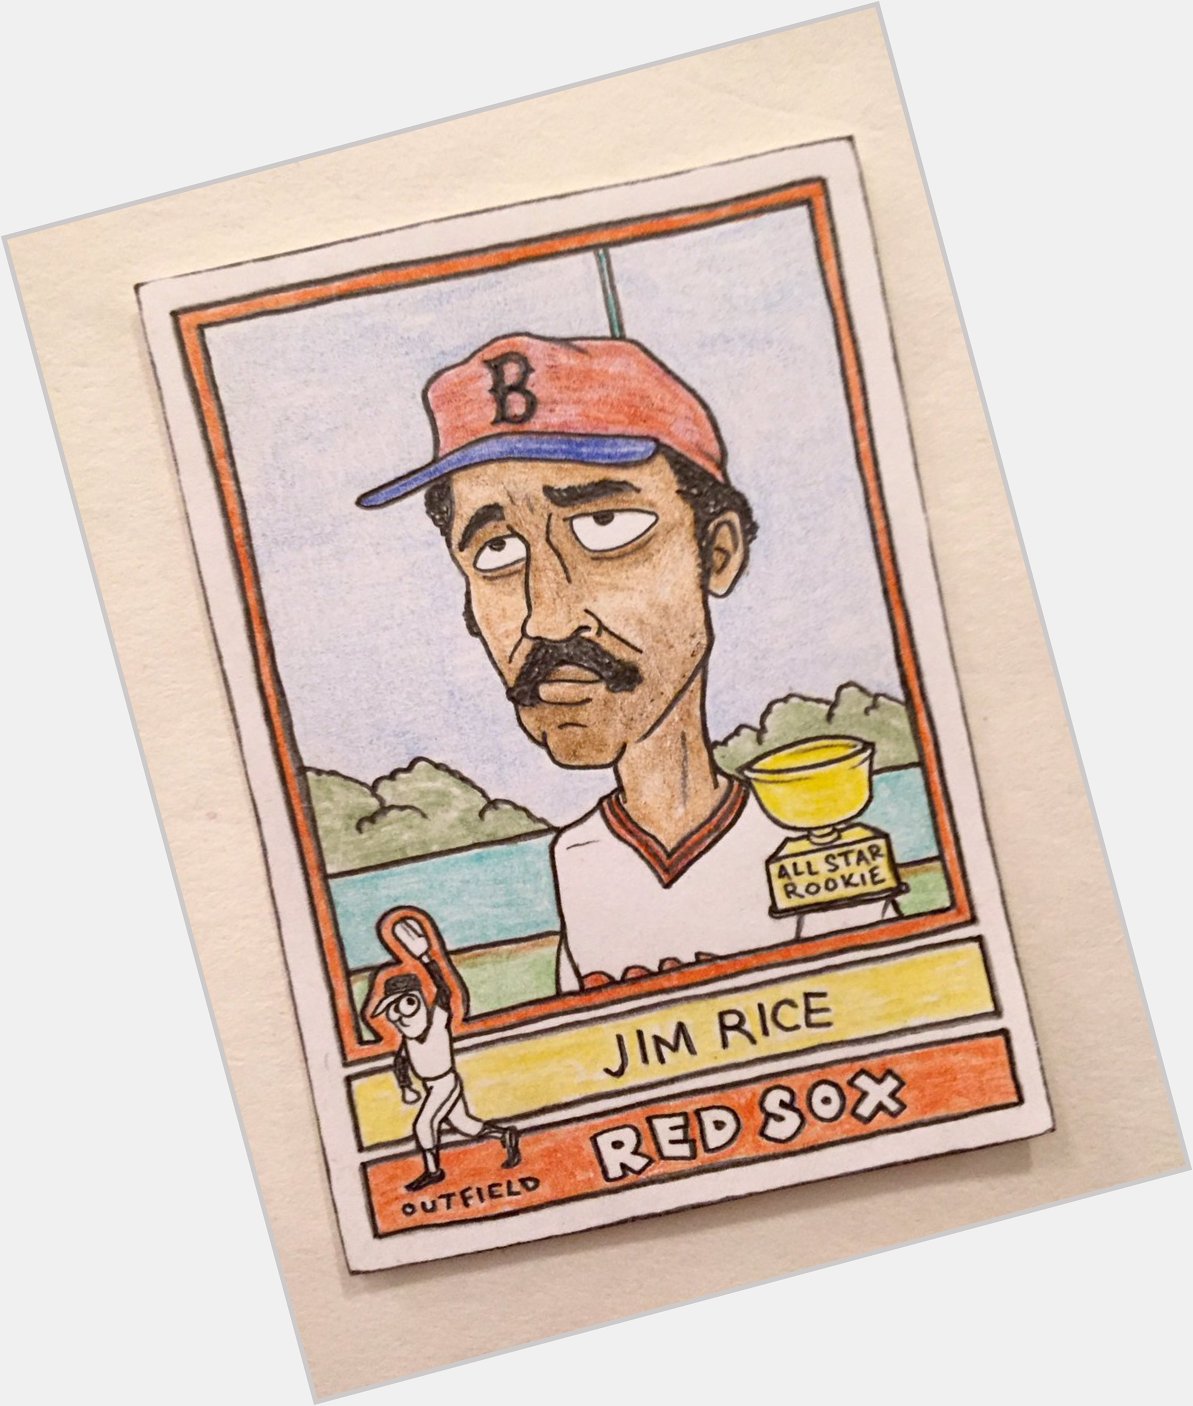 Happy birthday, Jim Rice! 